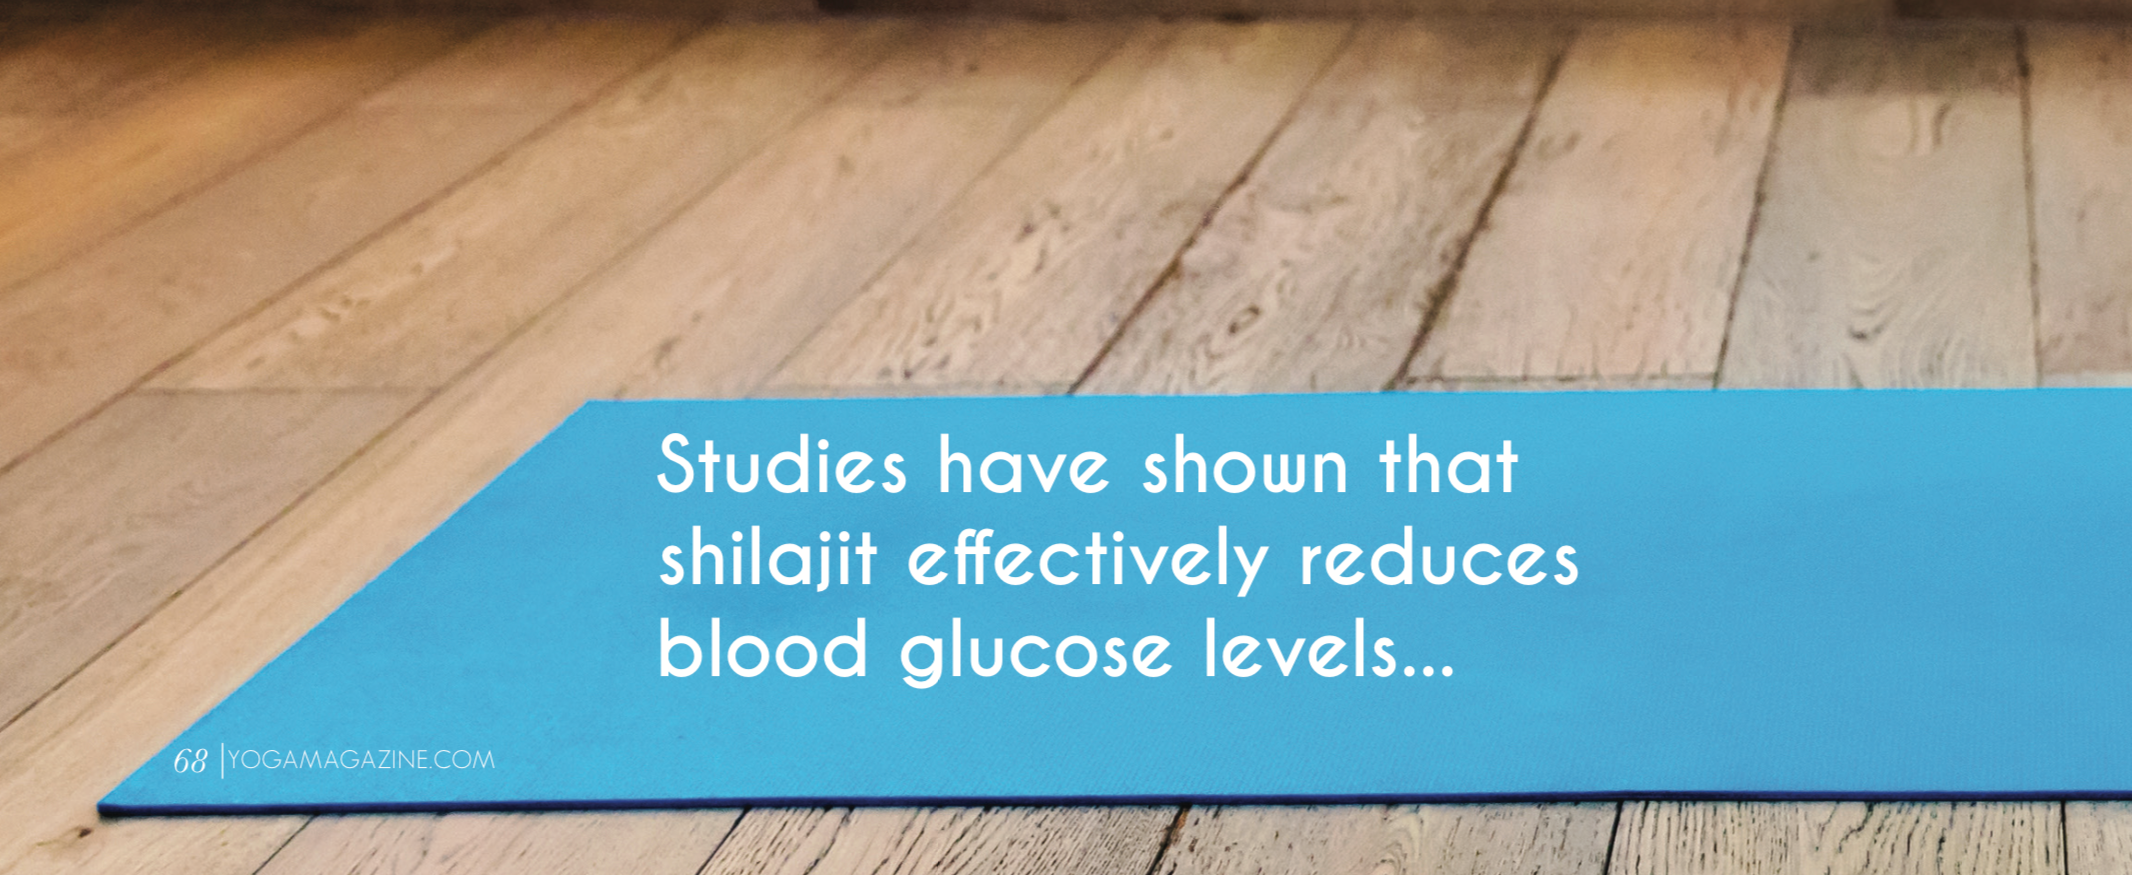 Shilajit effectively reduces blood glucose levels